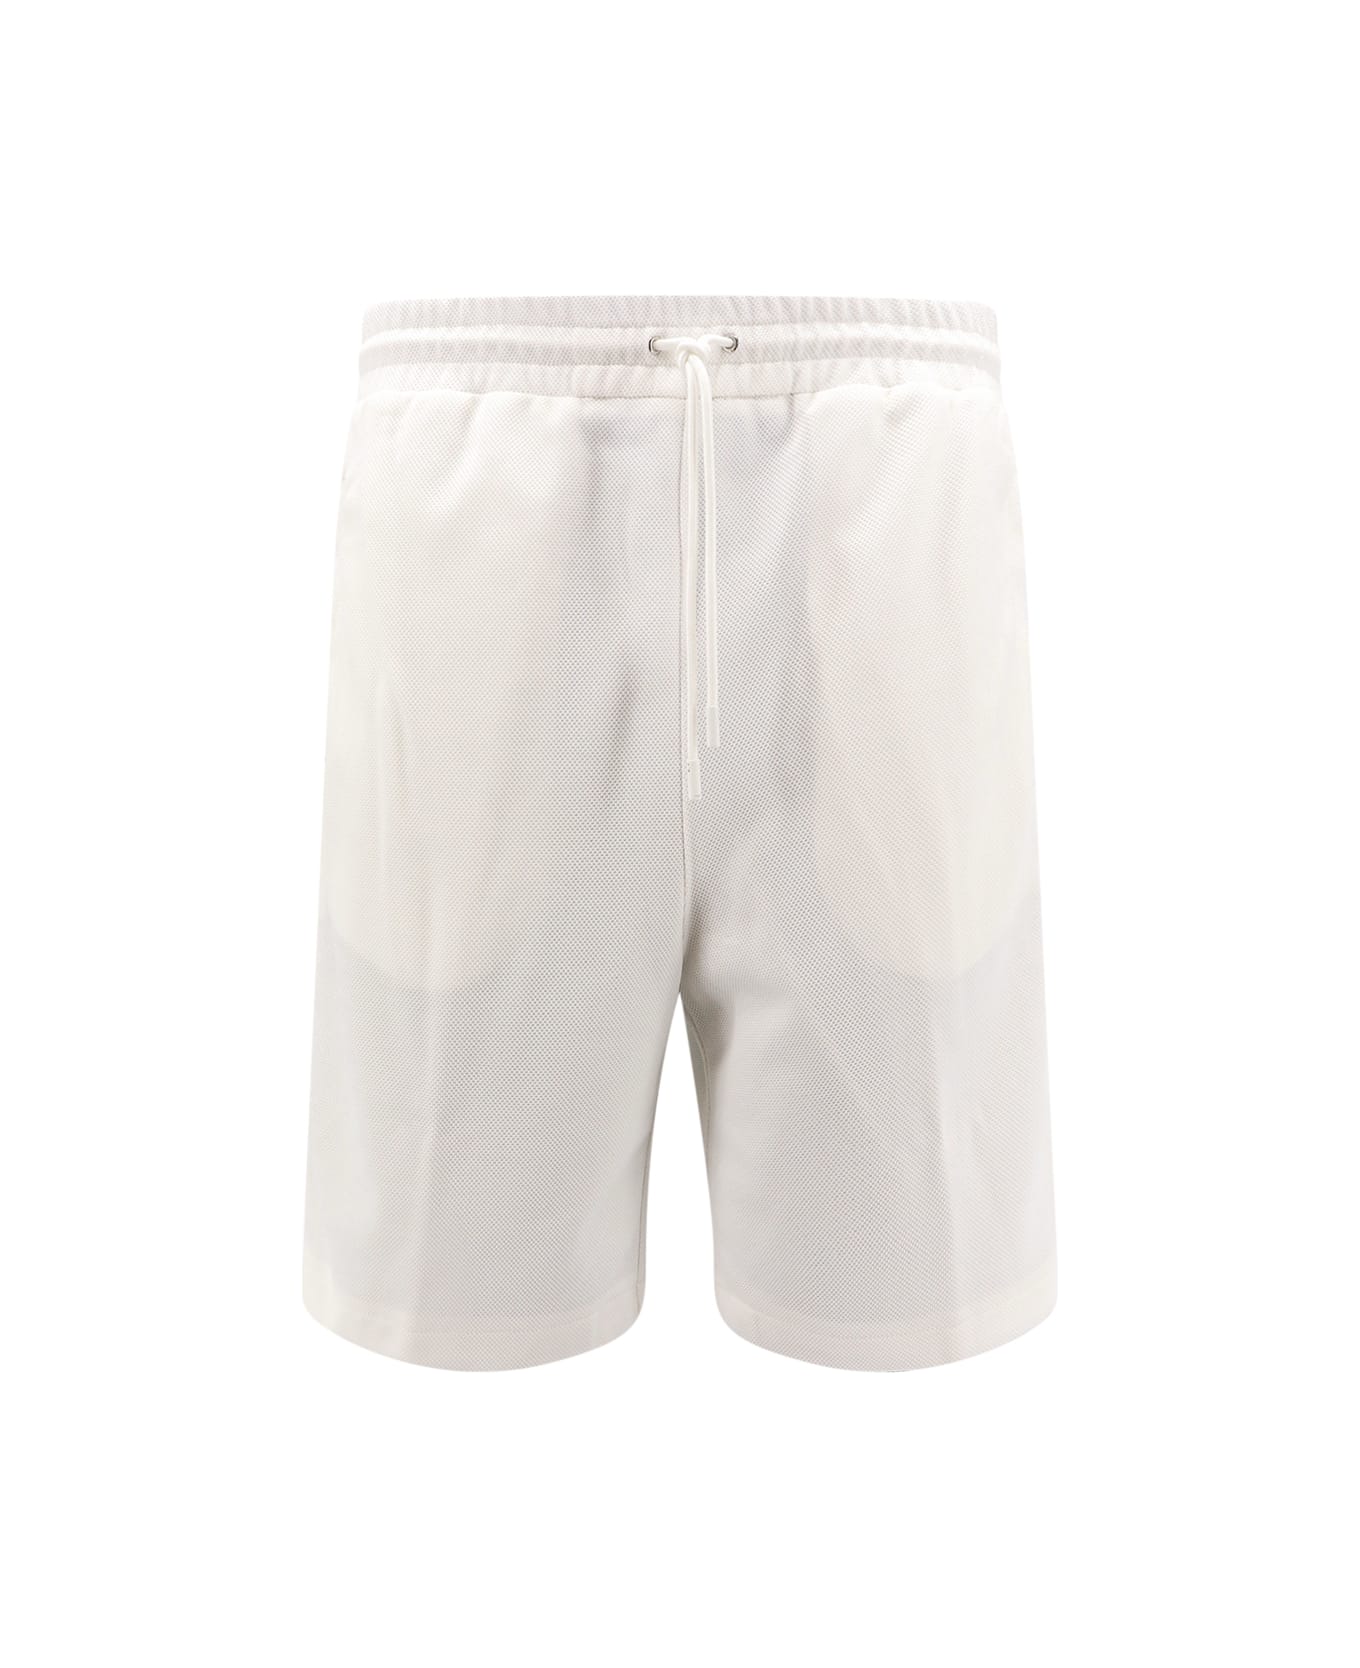 Gucci Bermuda Shorts - White